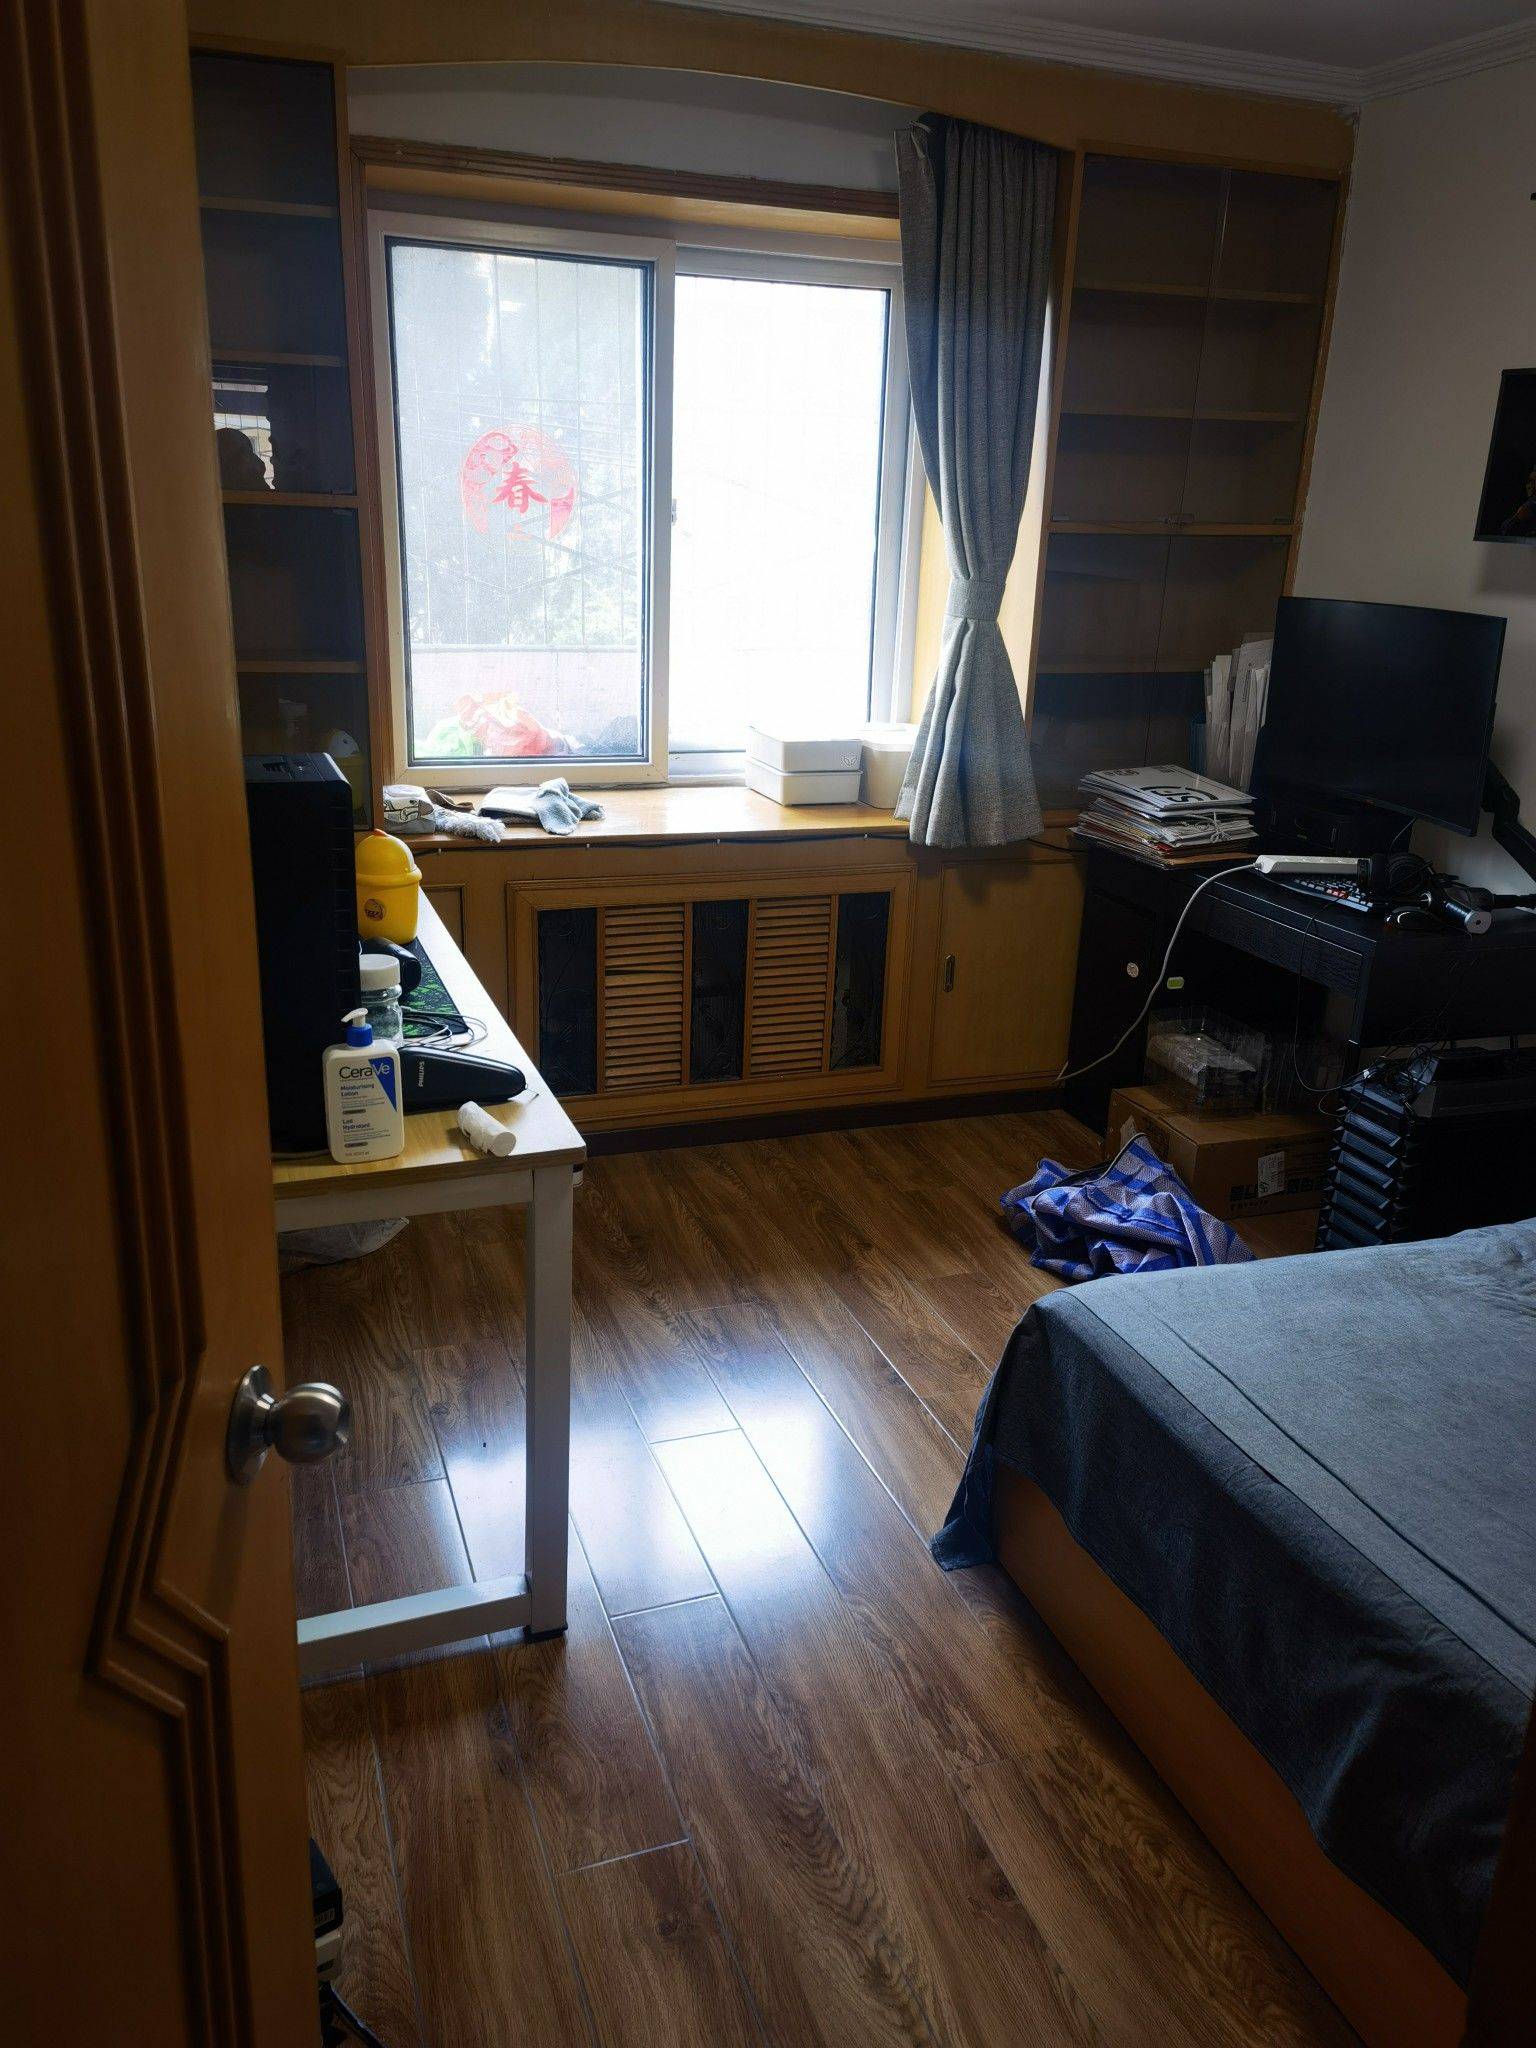 Beijing-Shijingshan-Cozy Home,Clean&Comfy,No Gender Limit,Hustle & Bustle,“Friends”,Chilled